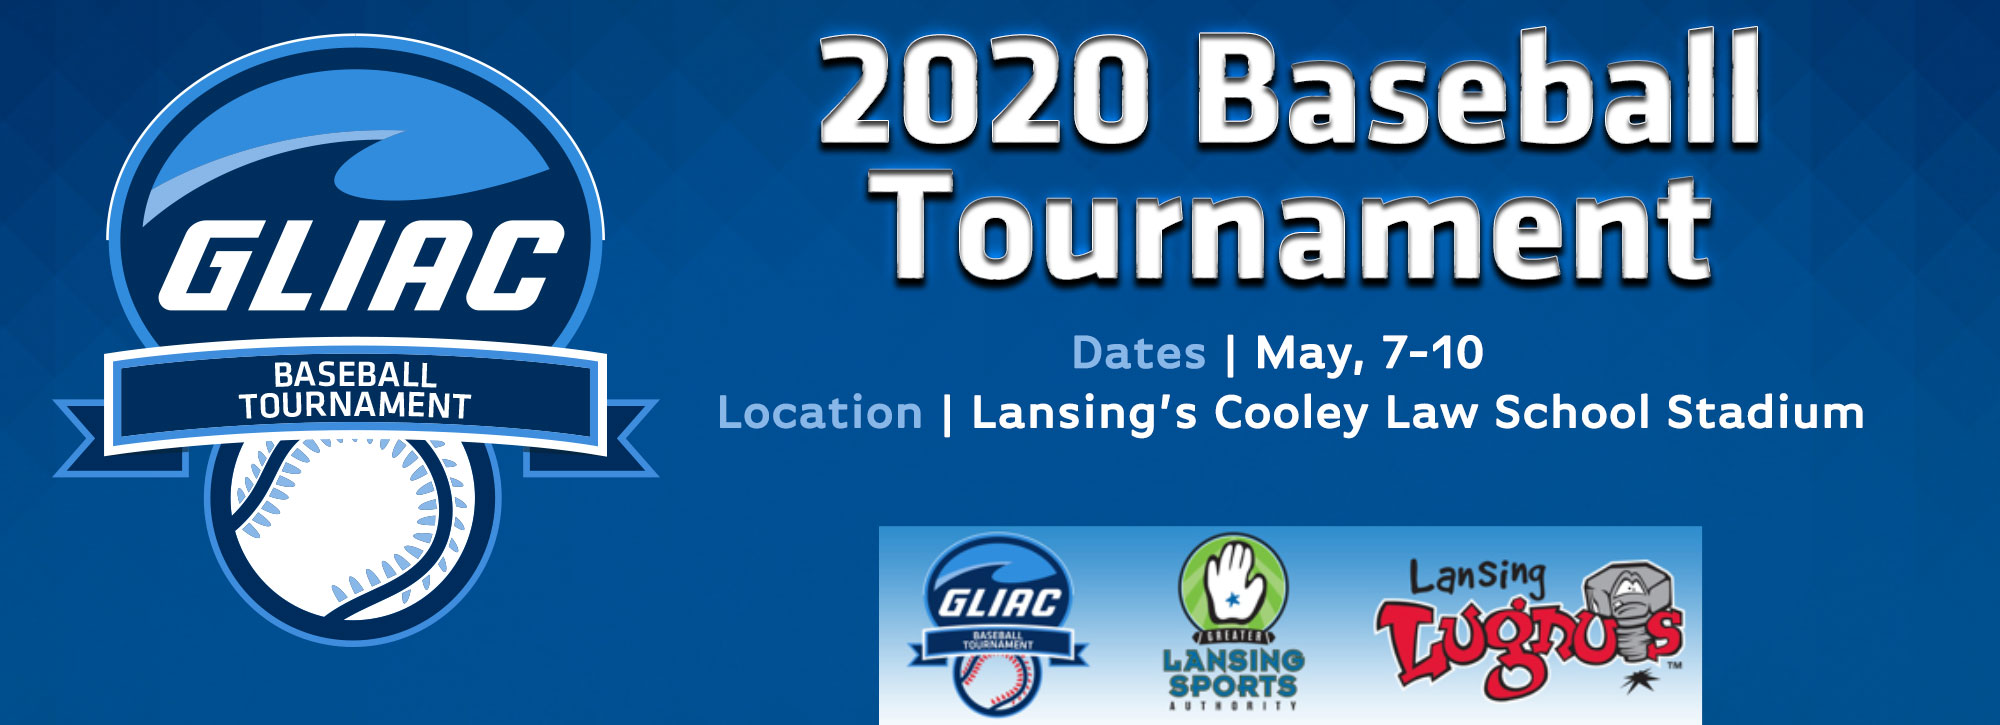 Lansing to host 2020 GLIAC Baseball Tournament